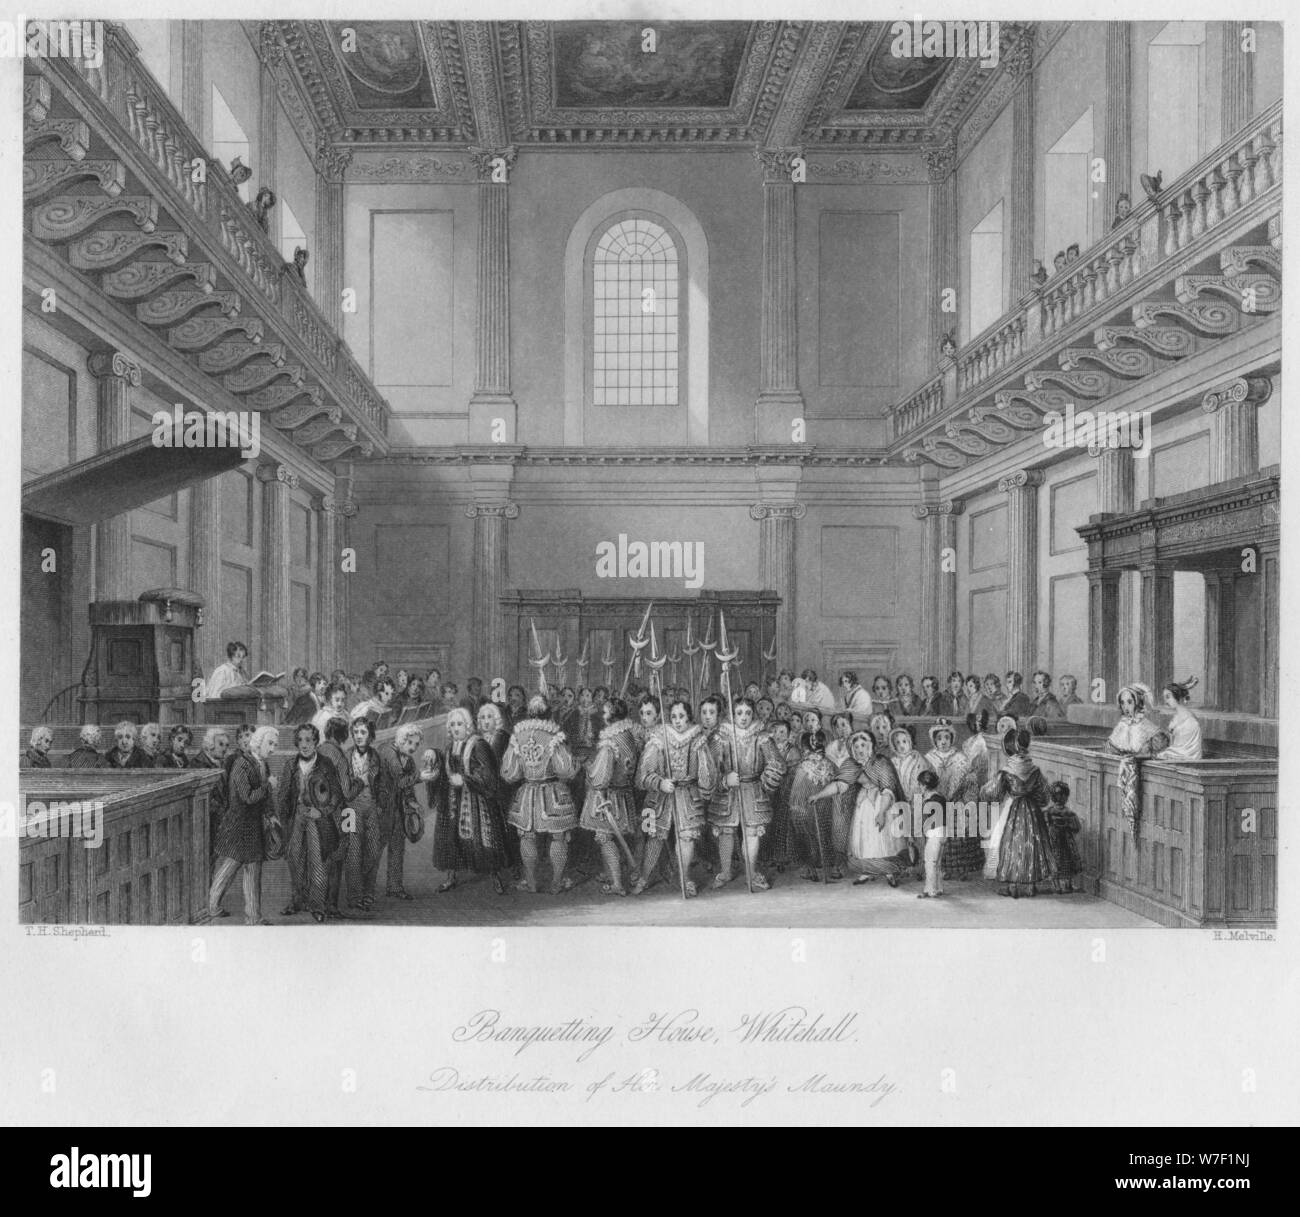 "Banqueting House di Whitehall. Distribuzione di Sua Maestà, Maundy', C1841. Artista: Henry Melville. Foto Stock